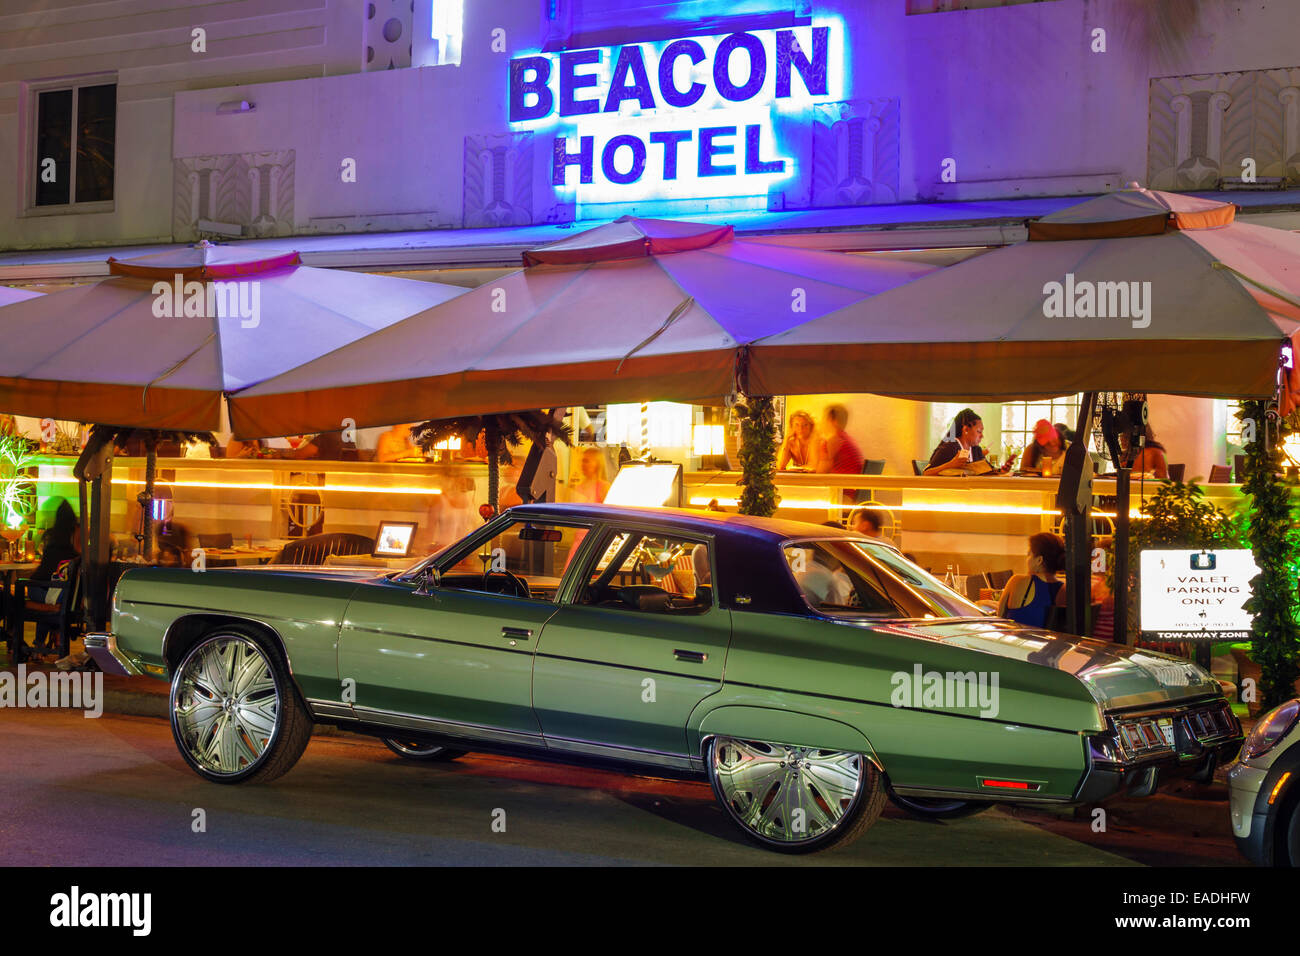 Miami Beach Florida,Ocean Drive,dusk,evening,night,palm trees,Beacon,hotel,buildings,neon,traffic,pimped classic car,customized,restaurant restaurants Stock Photo